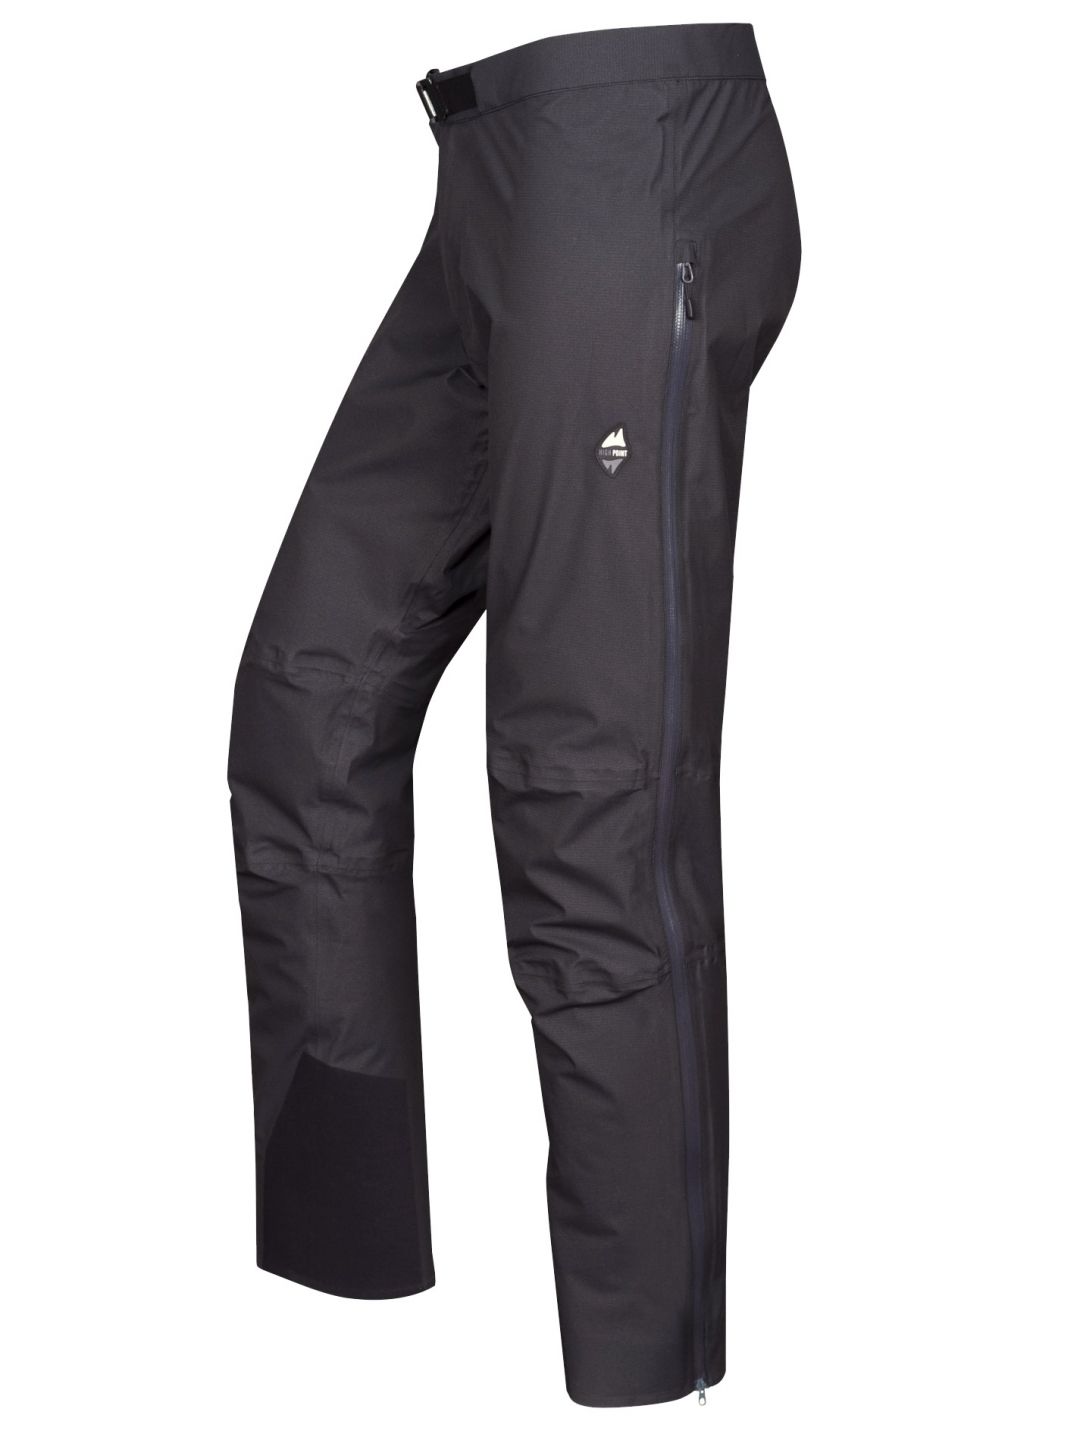 HIGH POINT CLIFF pants black varianta: XXL